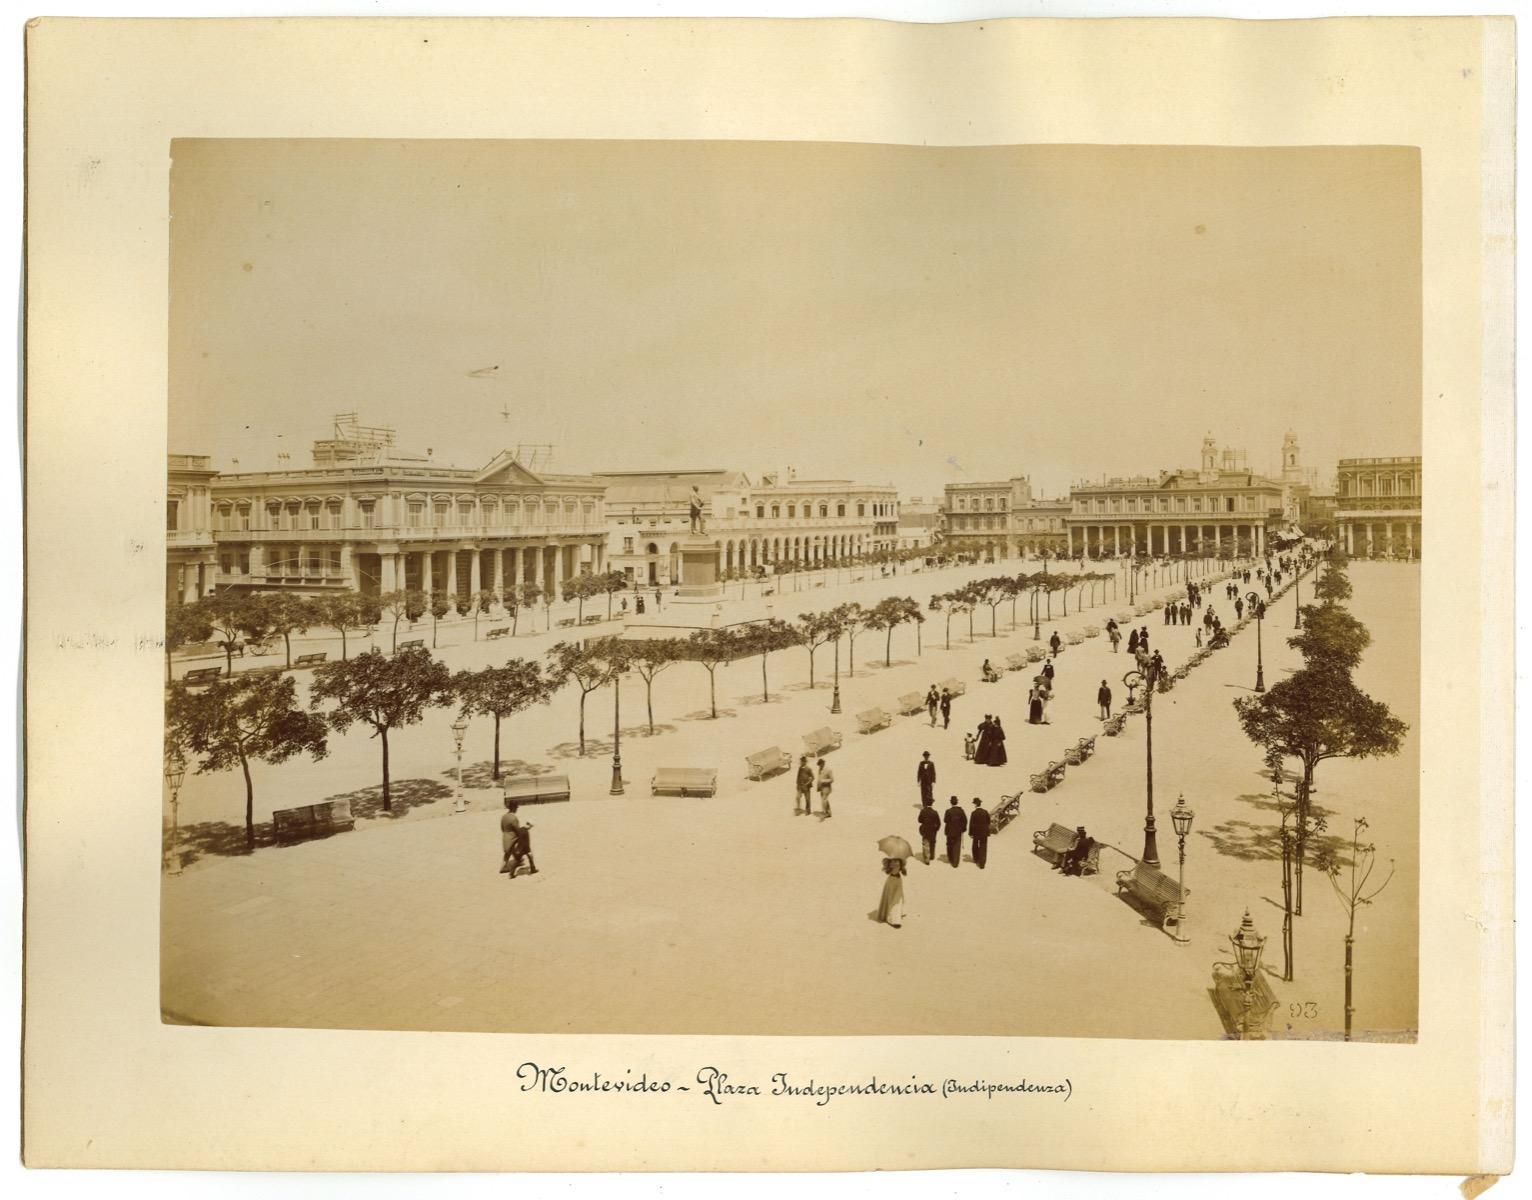 Unknown Landscape Photograph - Ancient View of Montevideo - Vintage Photo - 1880s